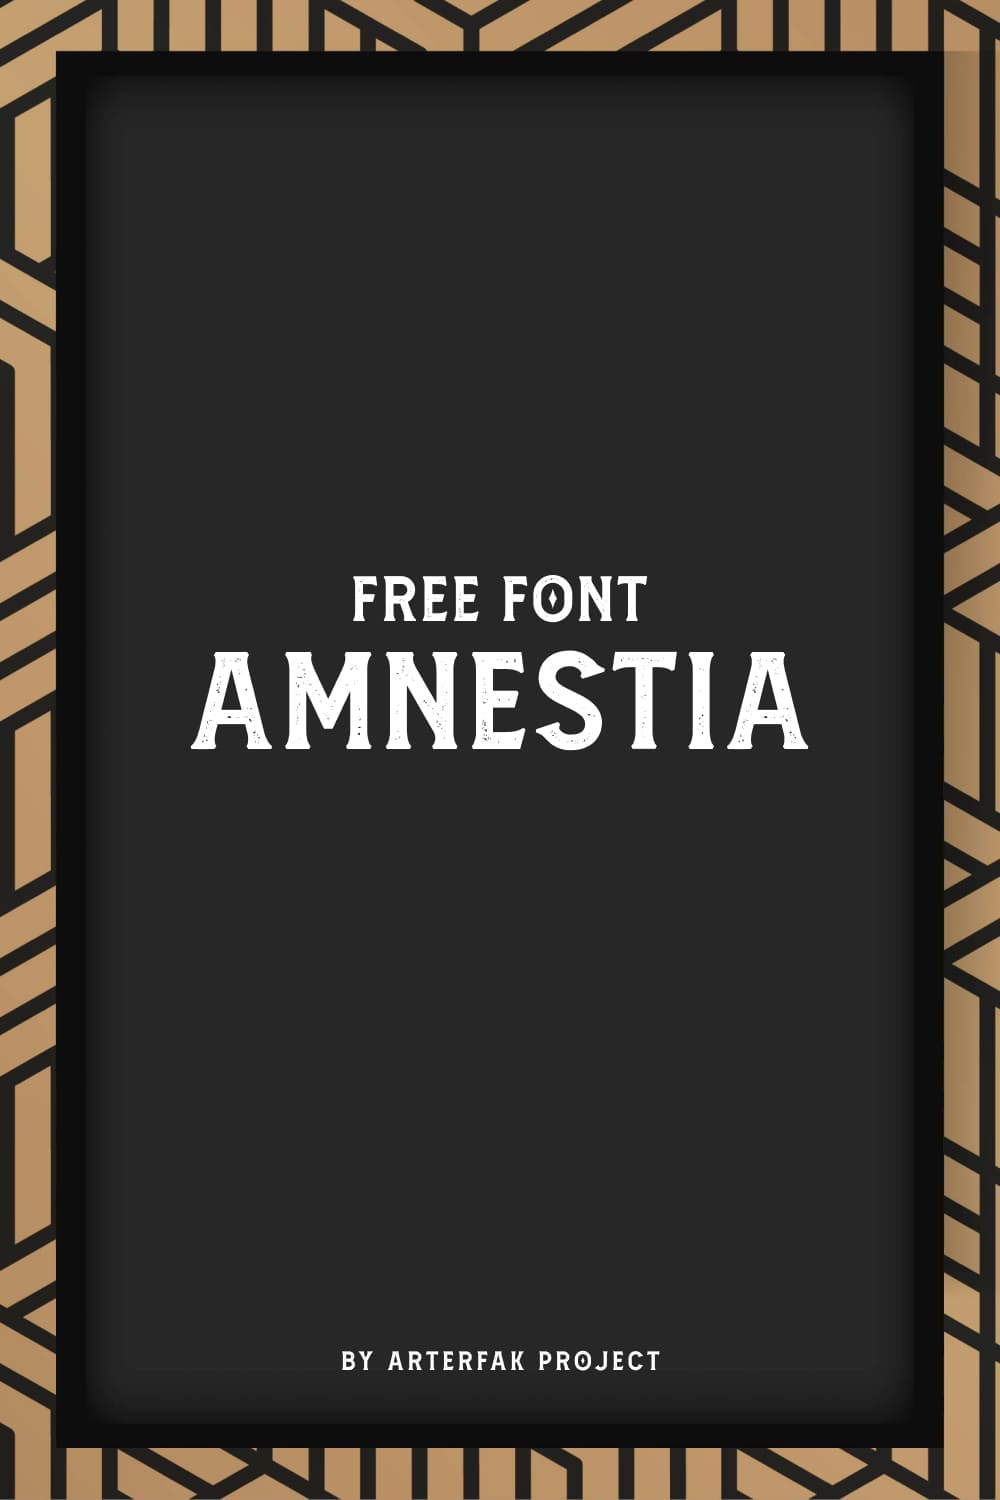 Free Amnestia Distressed Font MasterBundles Stylish Pinterest Collage Image.